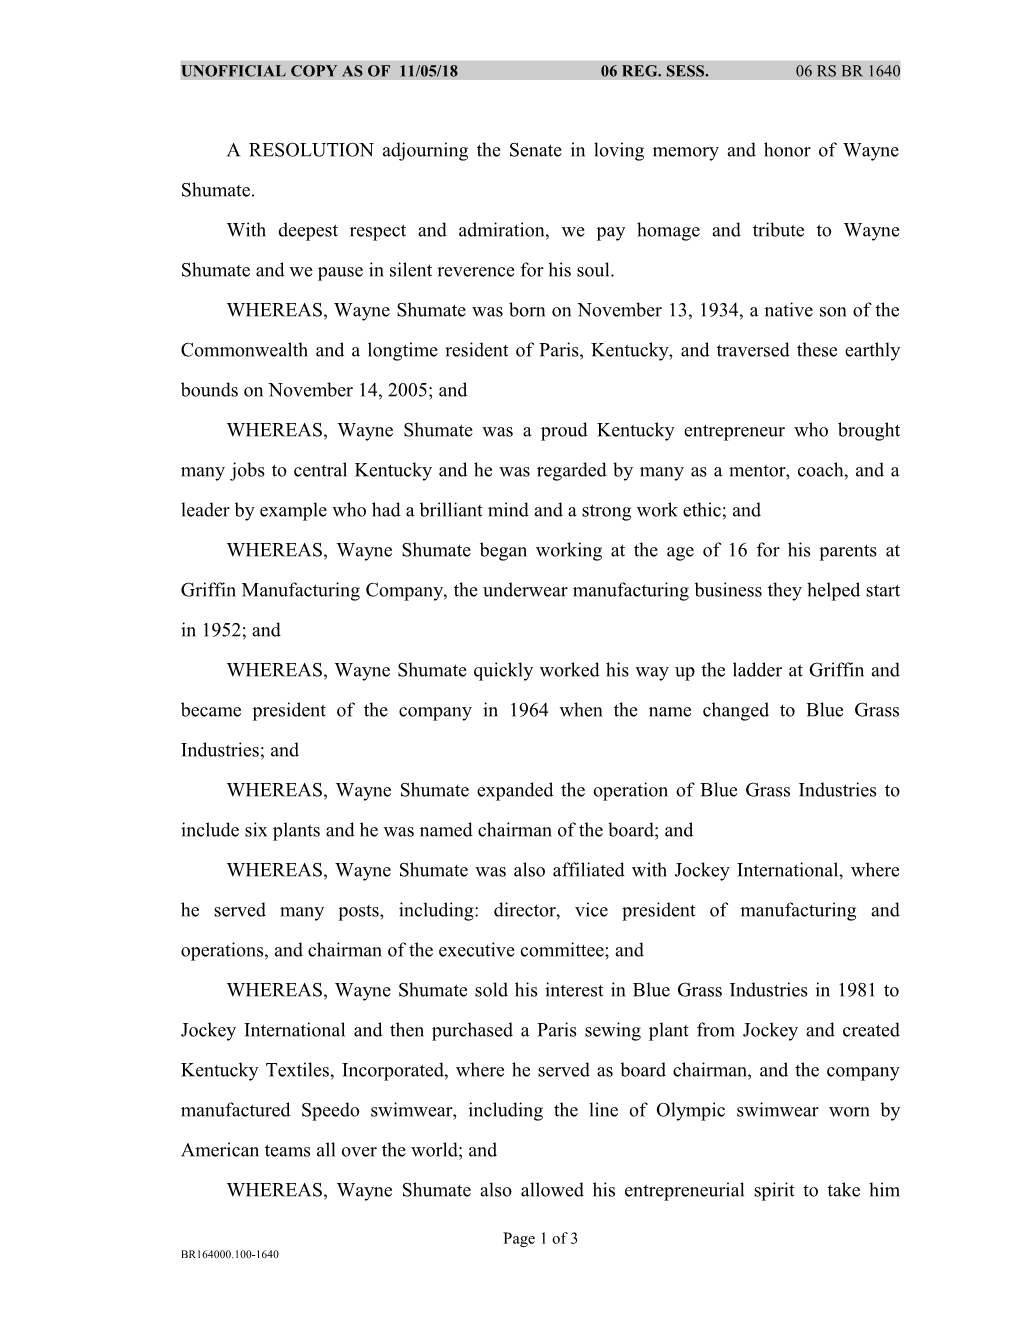 A RESOLUTION Adjourning the Senate in Loving Memory and Honor of Wayne Shumate